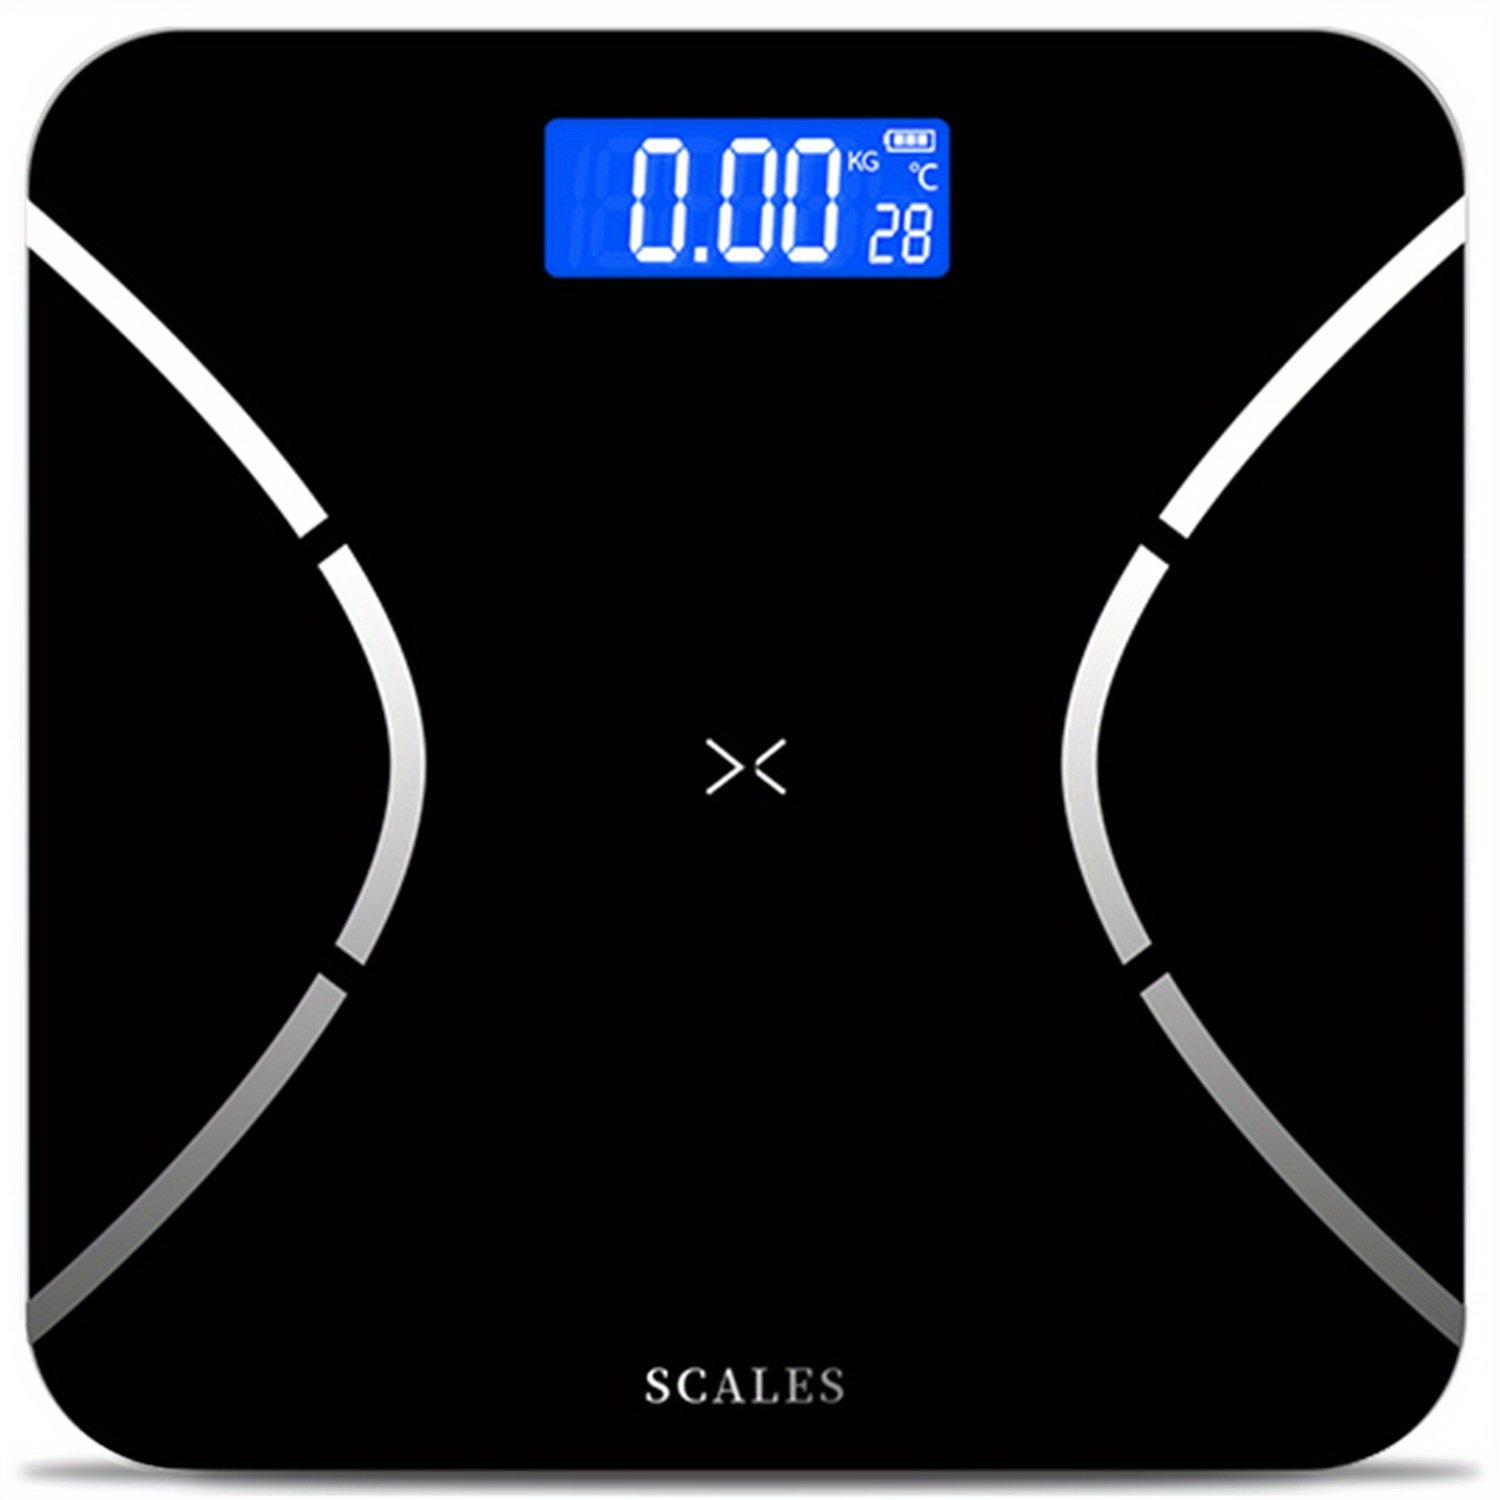 1pc Body Fat Scale Smart Wireless Digital Bathroom Weight Scale